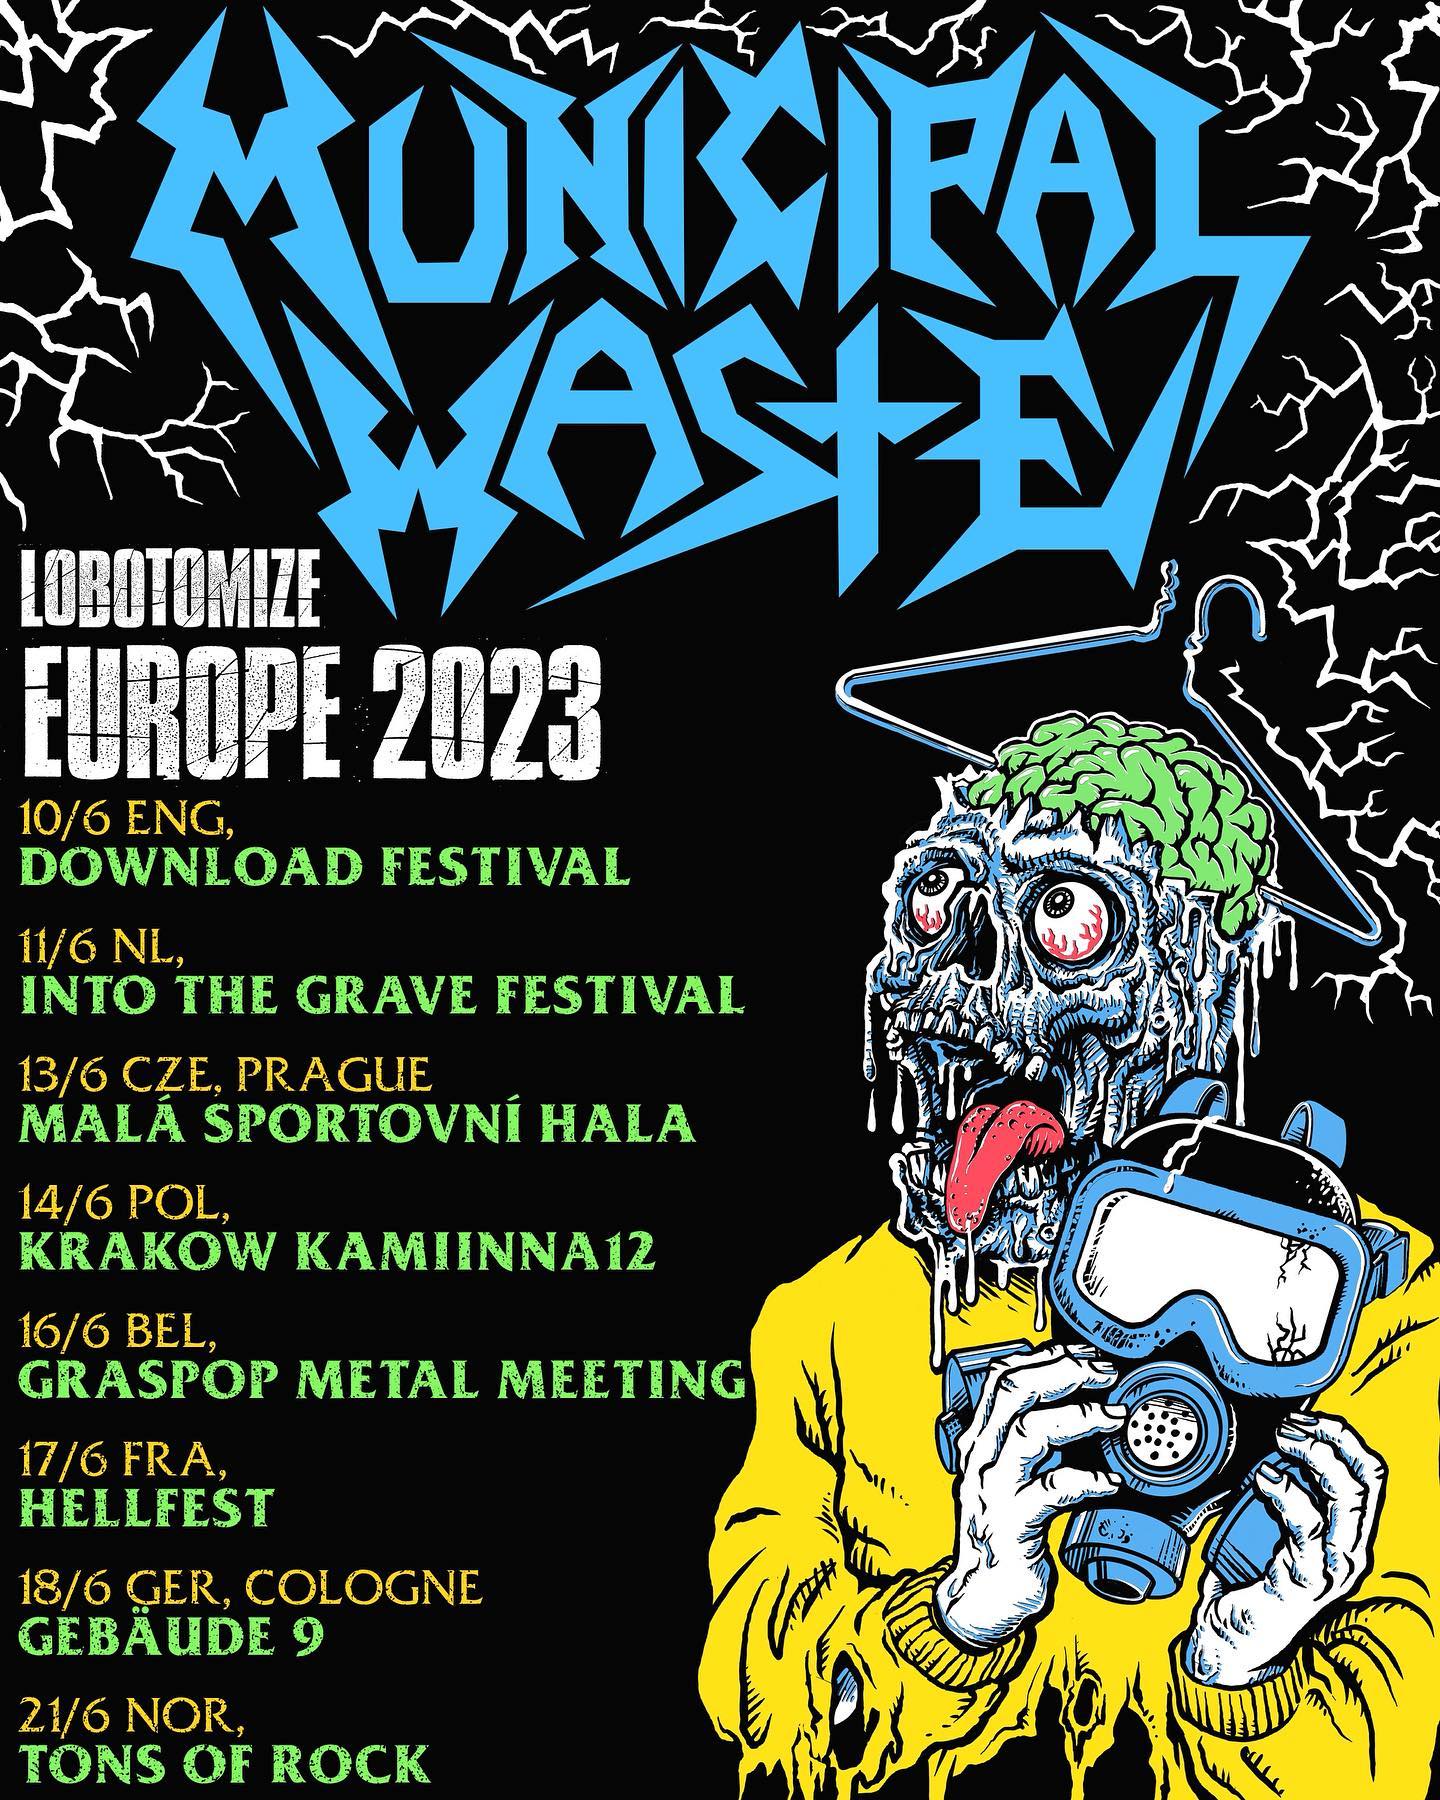 Municipal Waste - Lobotomize Europe 2023 Flyer